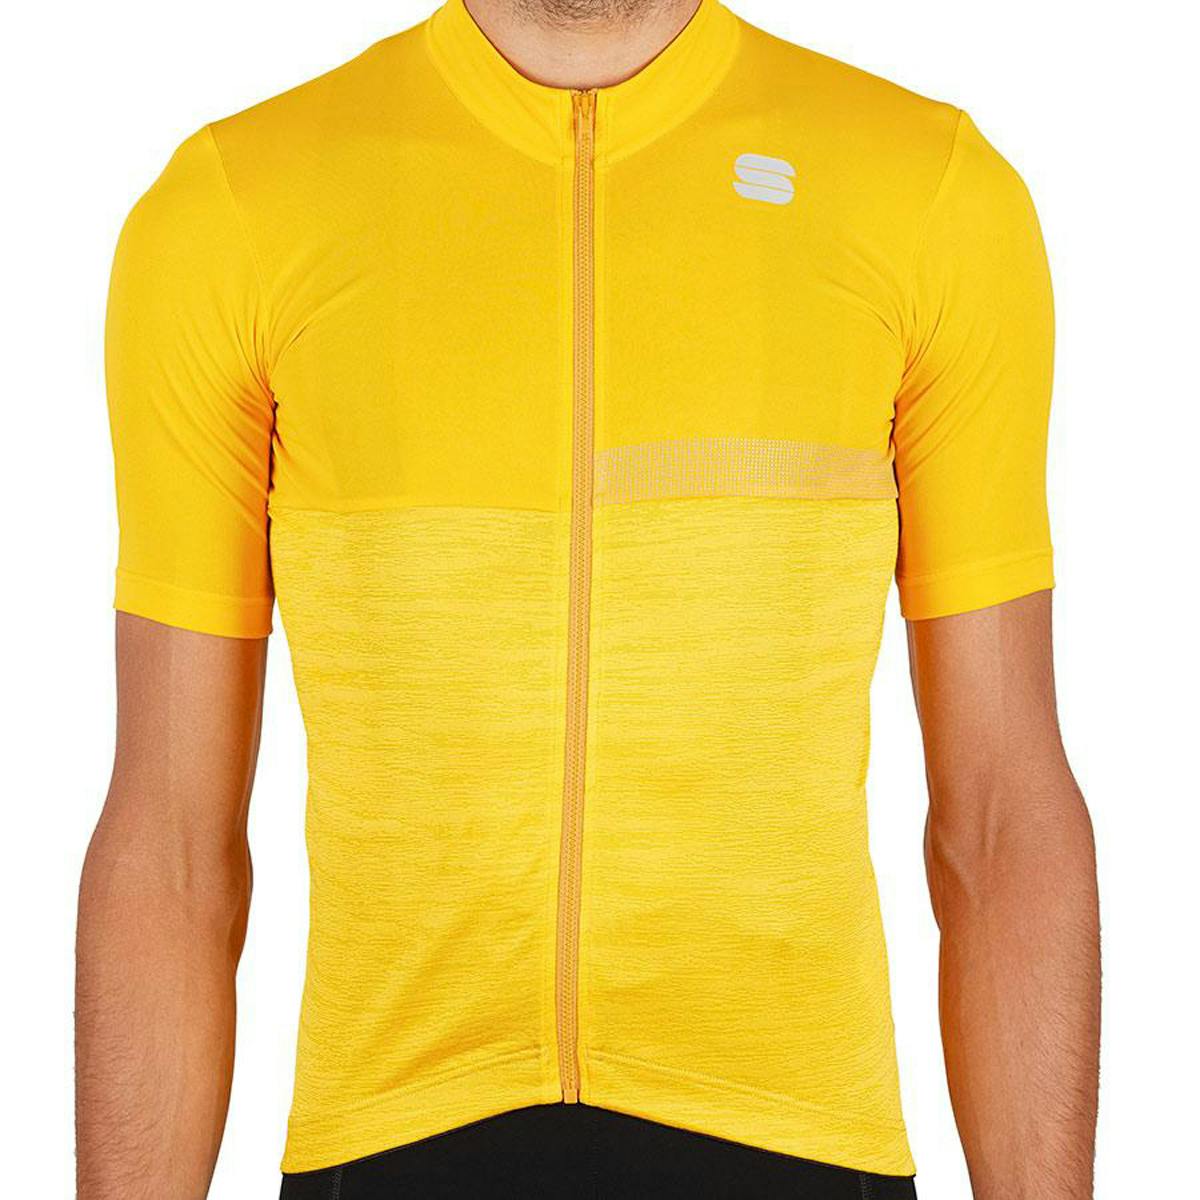 Sportful Giara Cycling Jersey - Yellow - XL